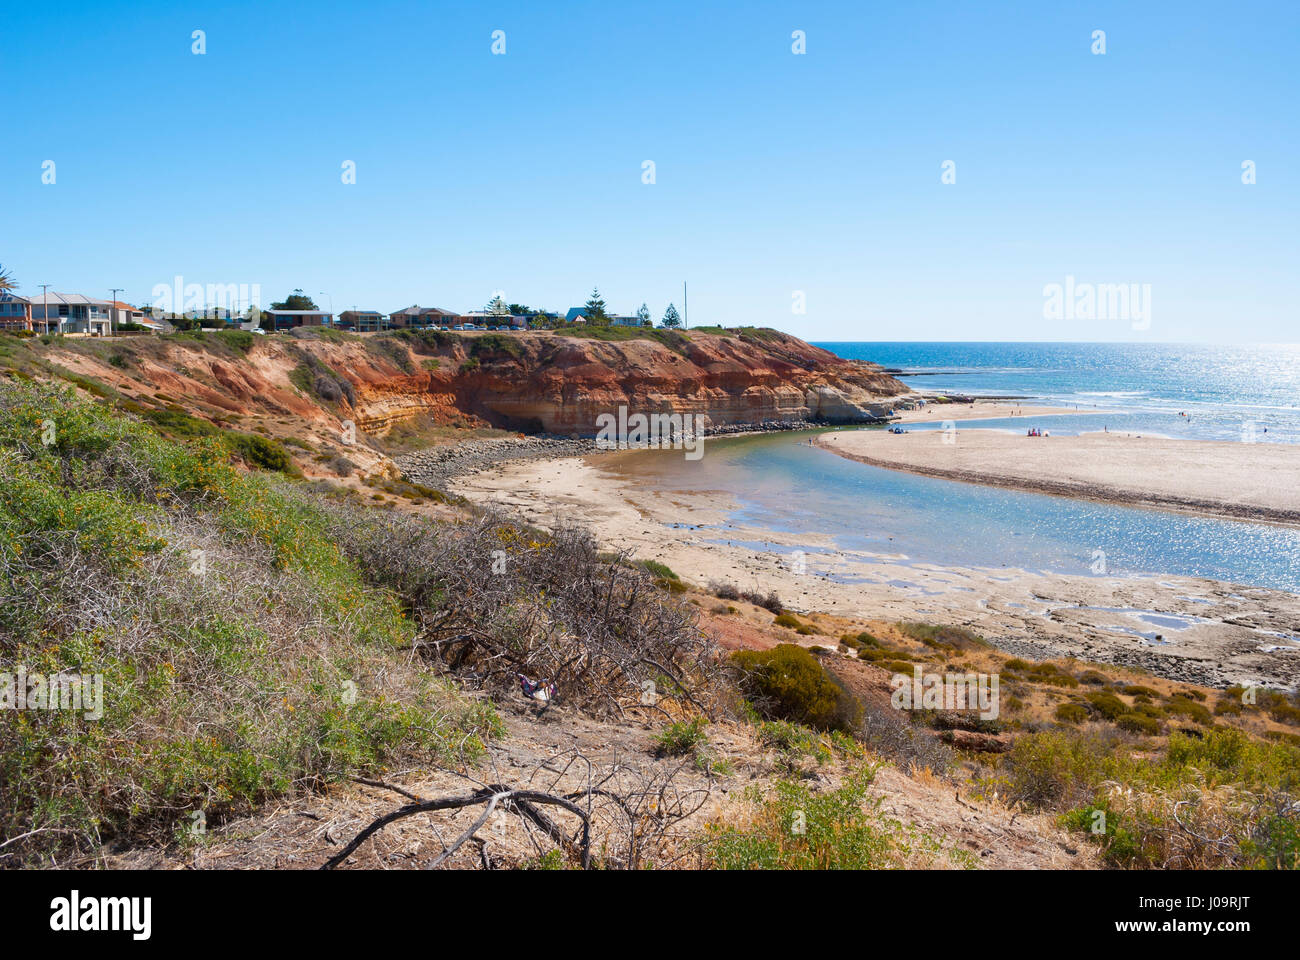 Southport Beach, dove l'Adelaide periferia di Port Noarlunga e Port Noarlunga periferia sud si incontrano, divisi dal fiume Onkaparinga estuario. Foto Stock